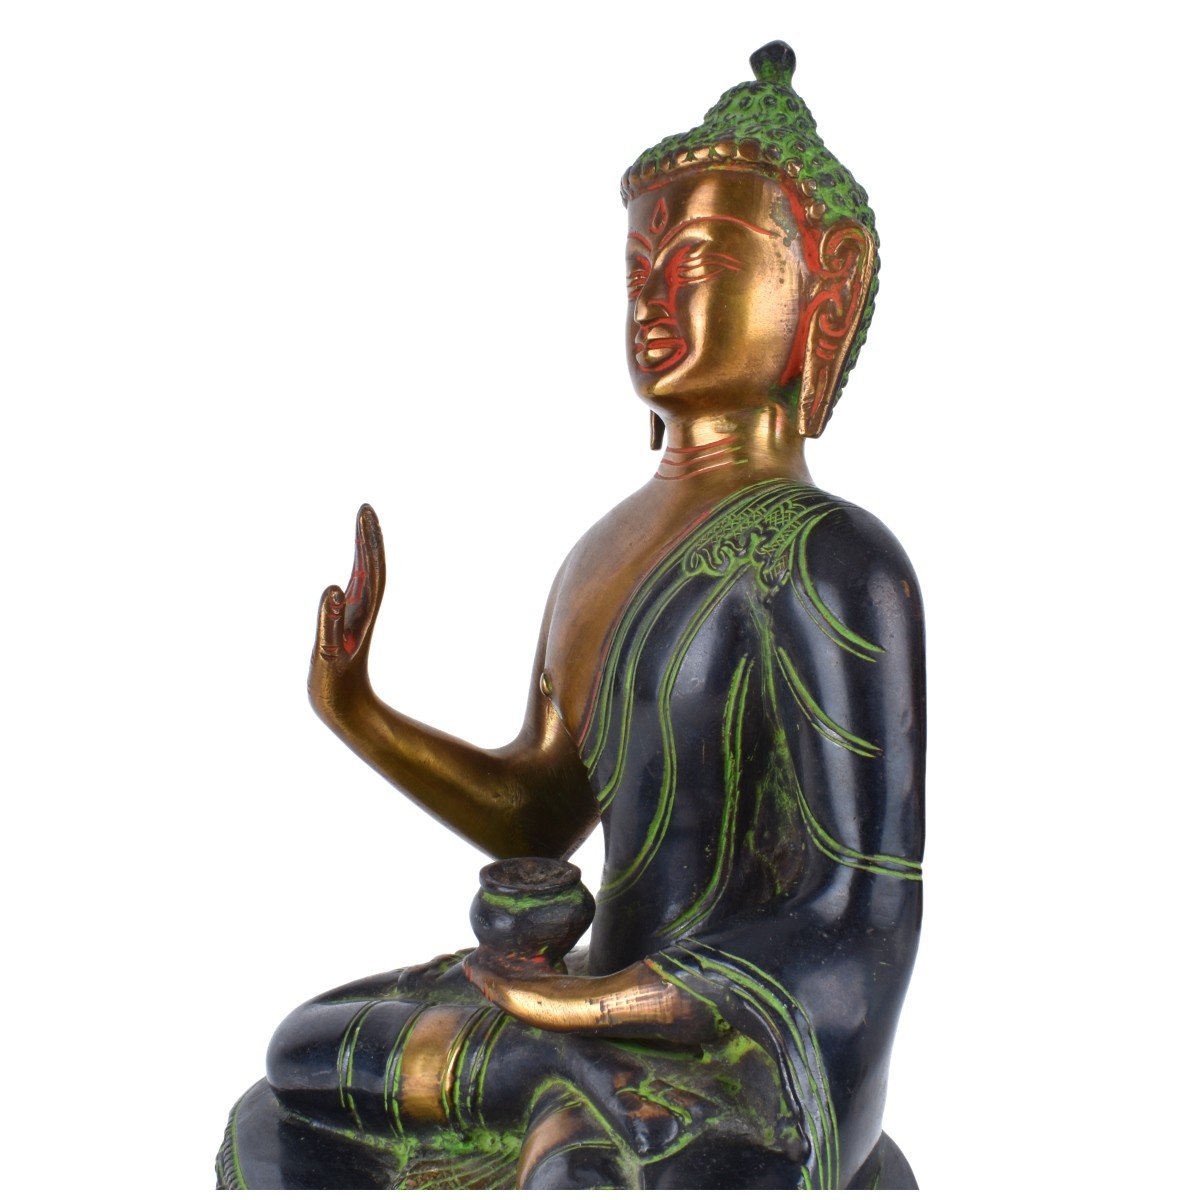 Three (3) Antique Thai Buddhist Figurines